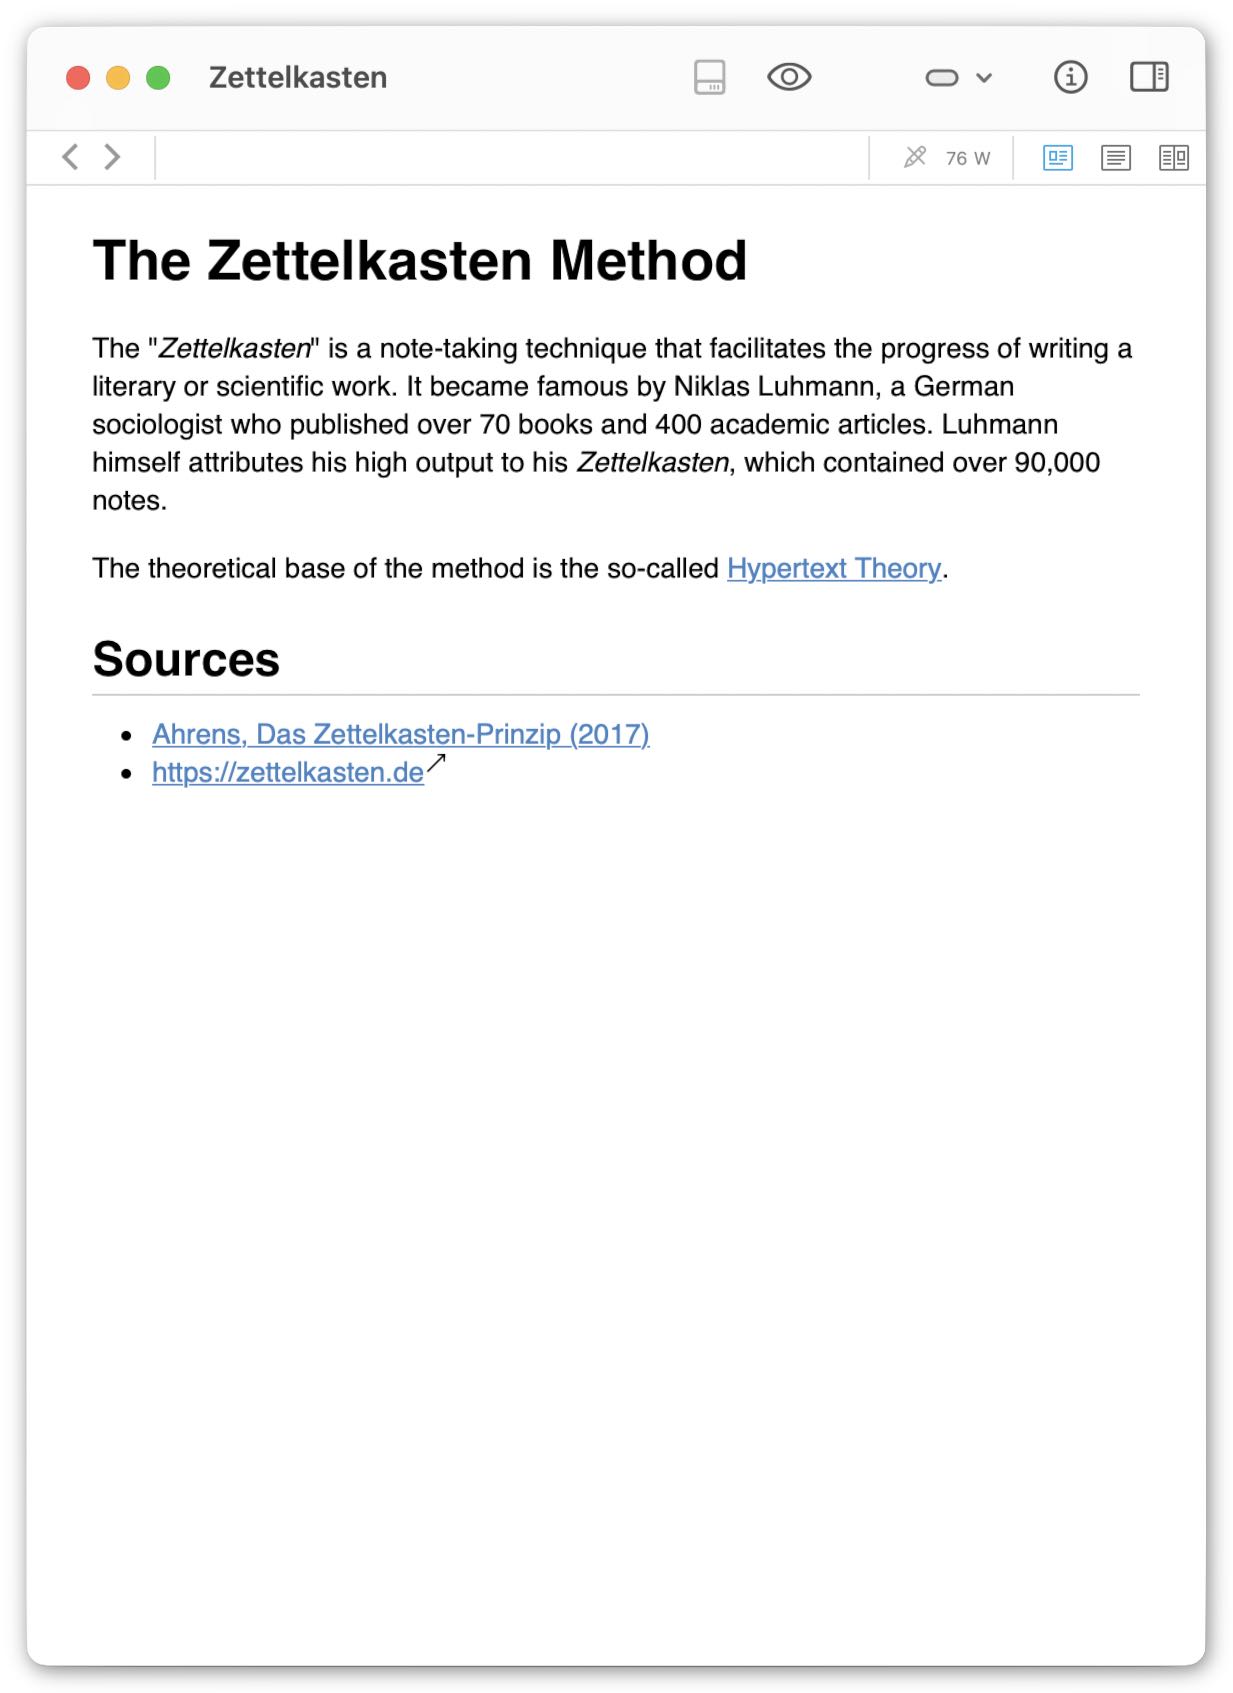 Permanent note on the Zettelkasten method (in preview mode).